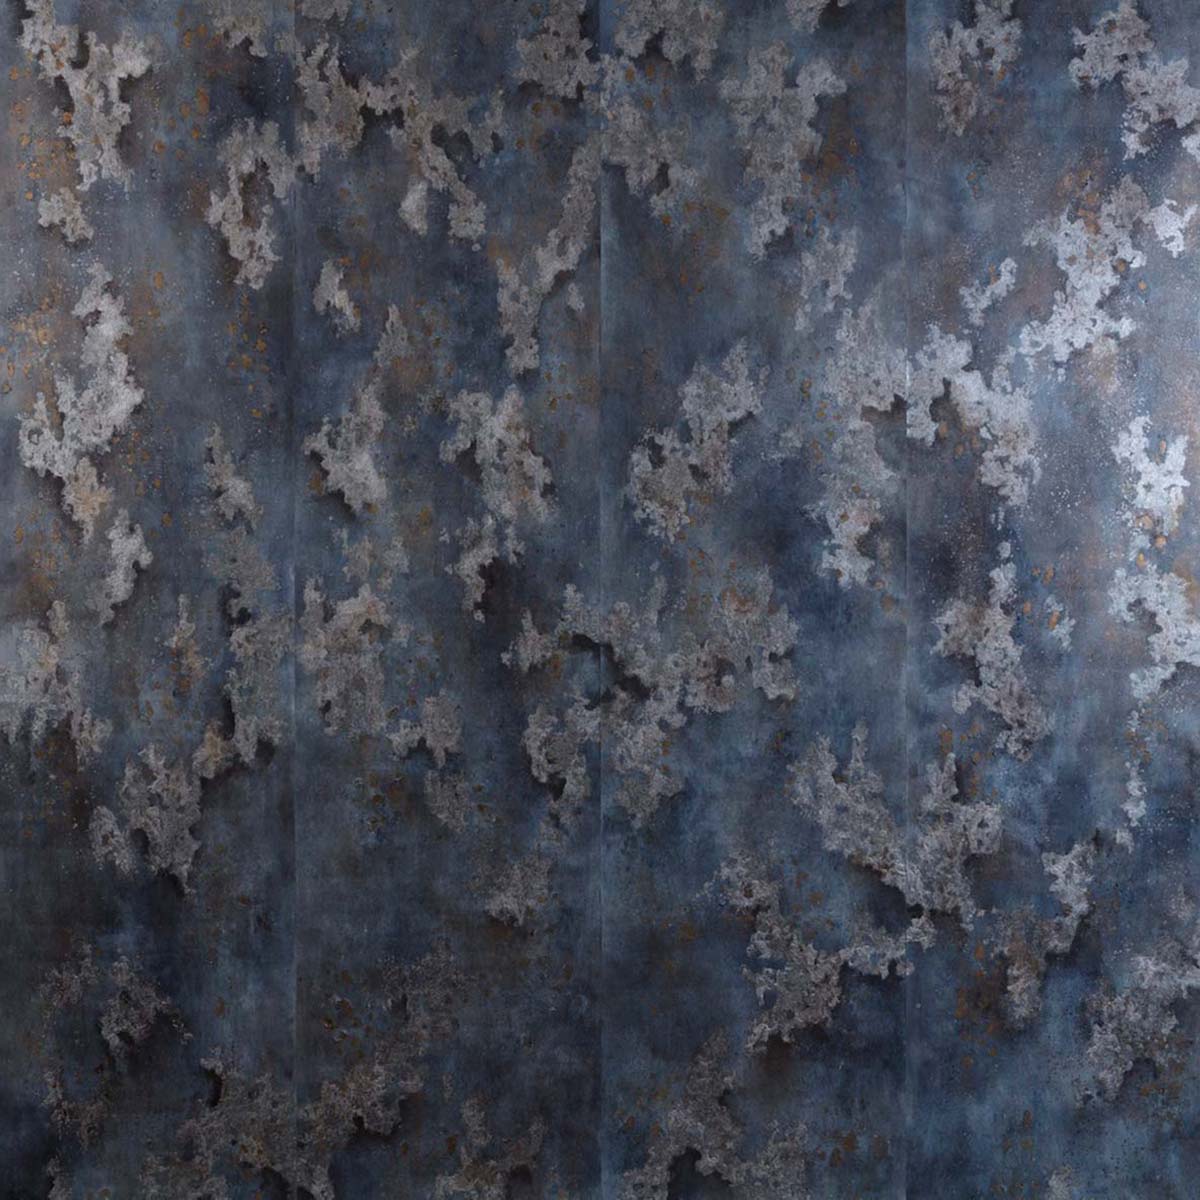 Midnight Moon Dust by Fabscarte, Design Martyn Thompson